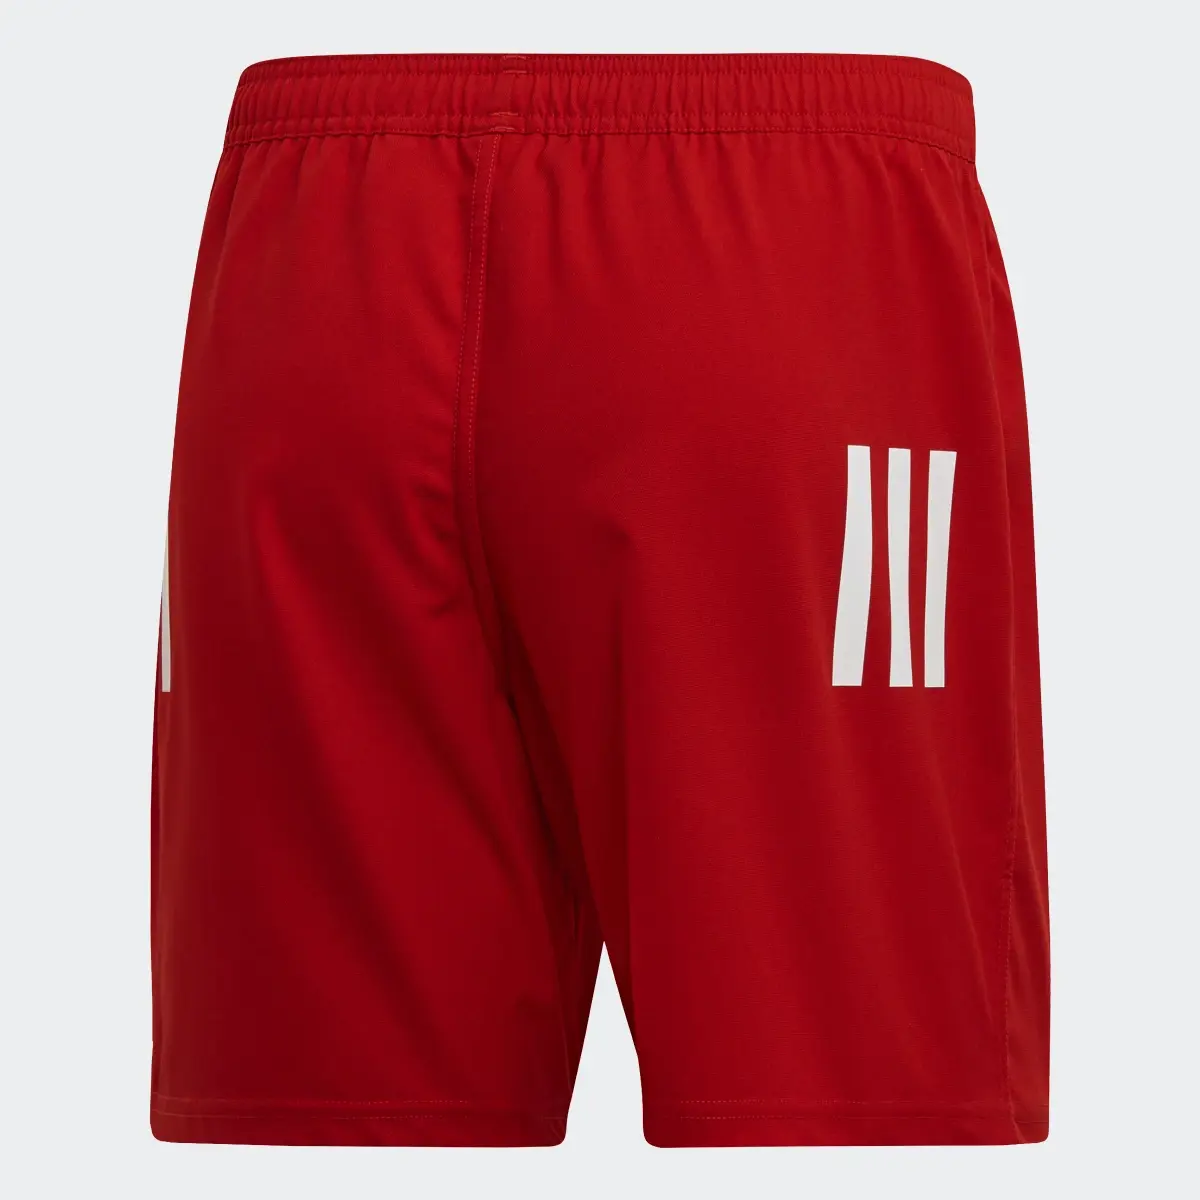 Adidas 3-Stripes Shorts. 2